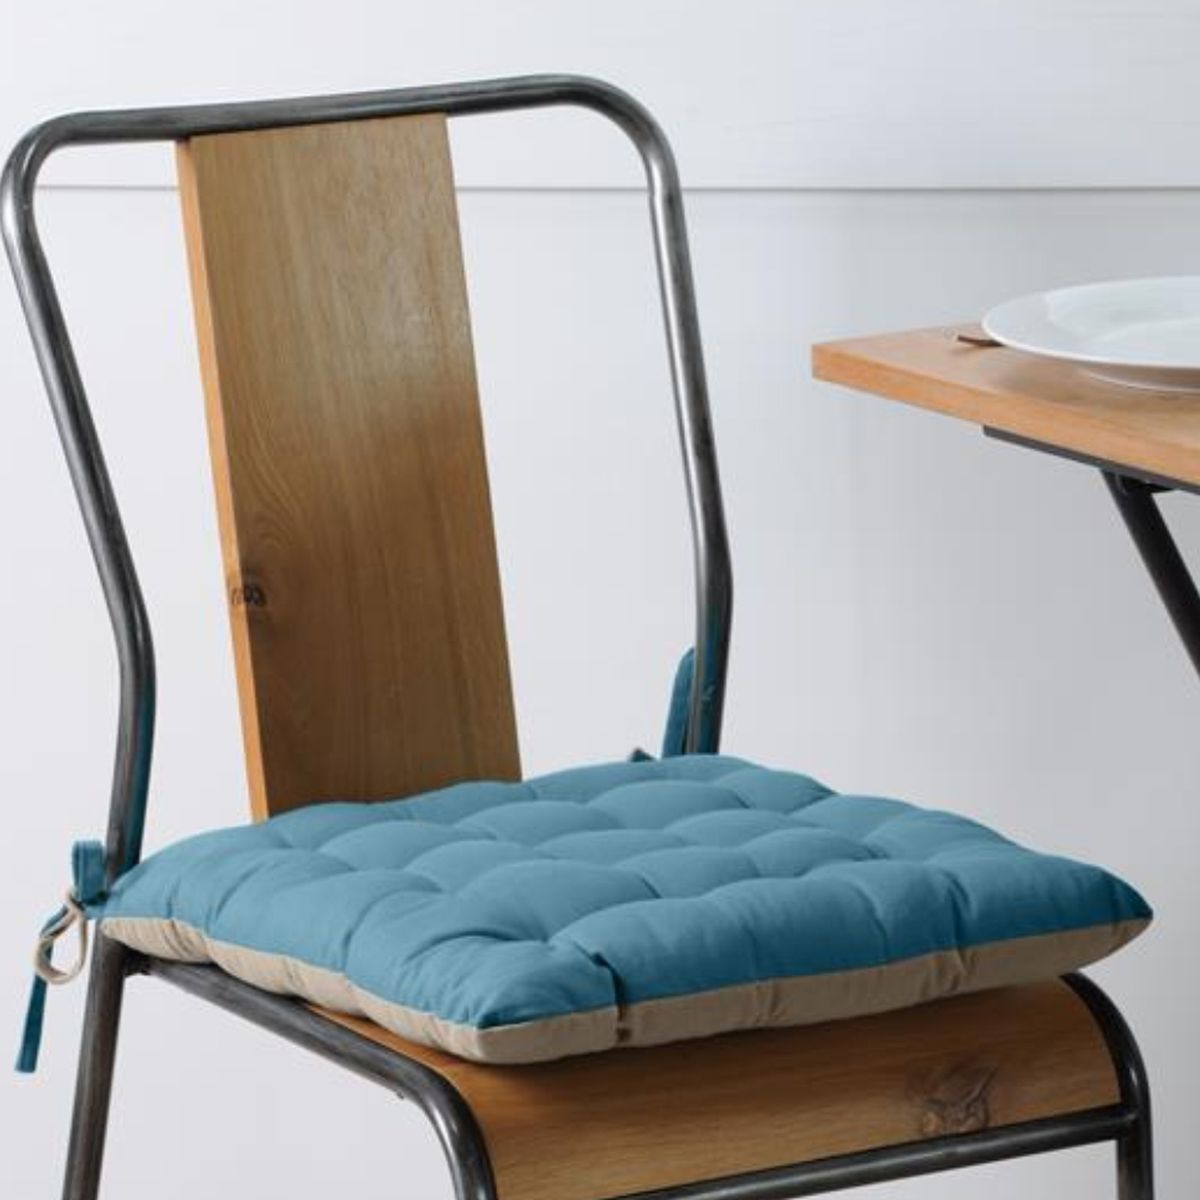 chair cushion - 2 sides - Beige and Blue 40 cm